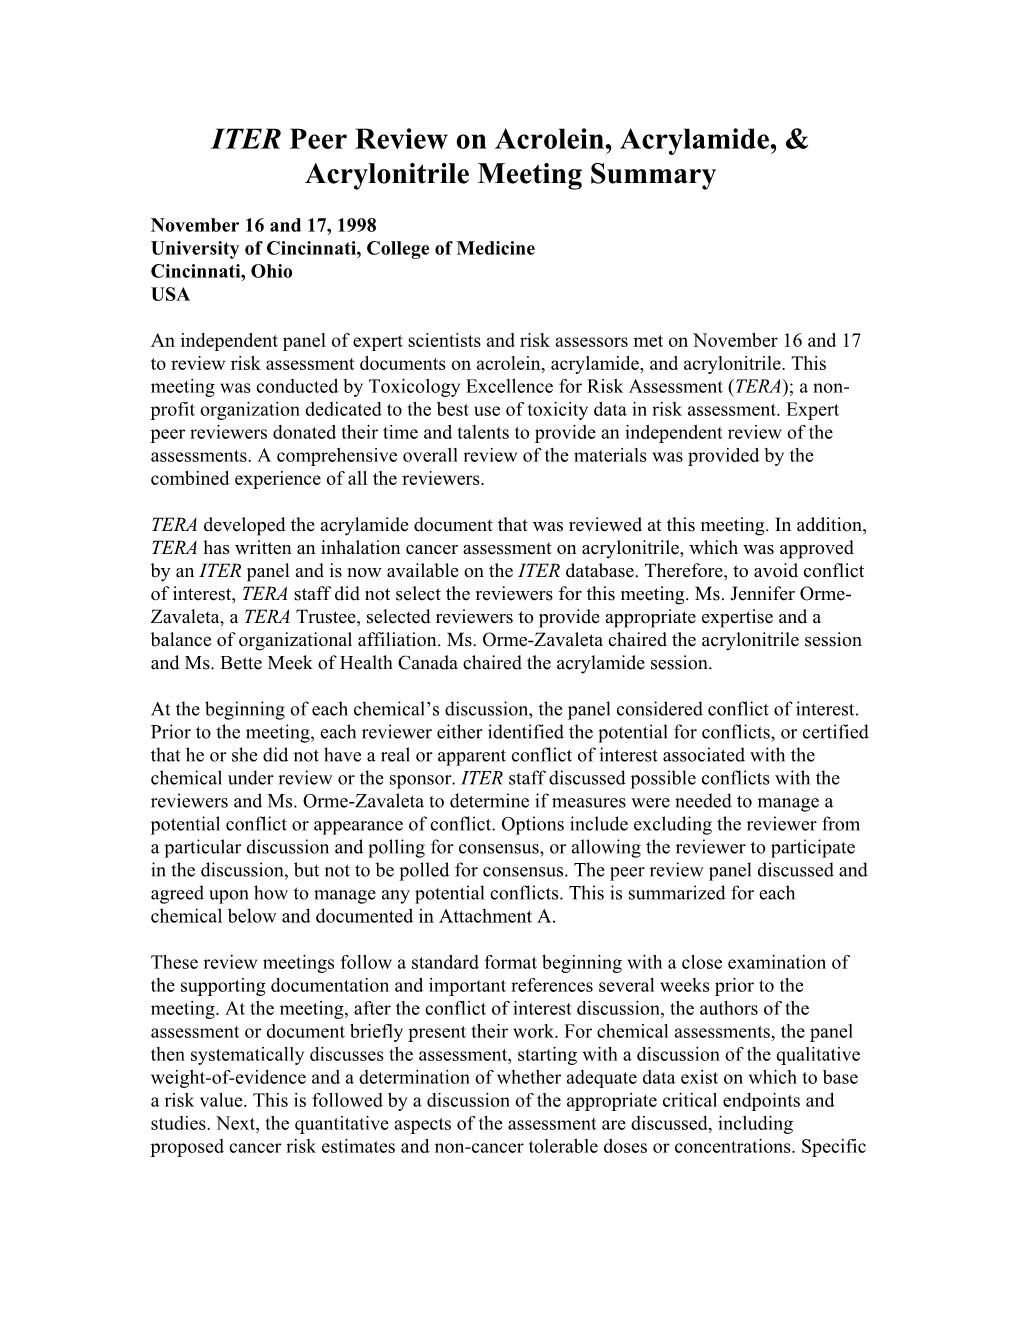 ITER Peer Review on Acrolein, Acrylamide, & Acrylonitrile Meeting